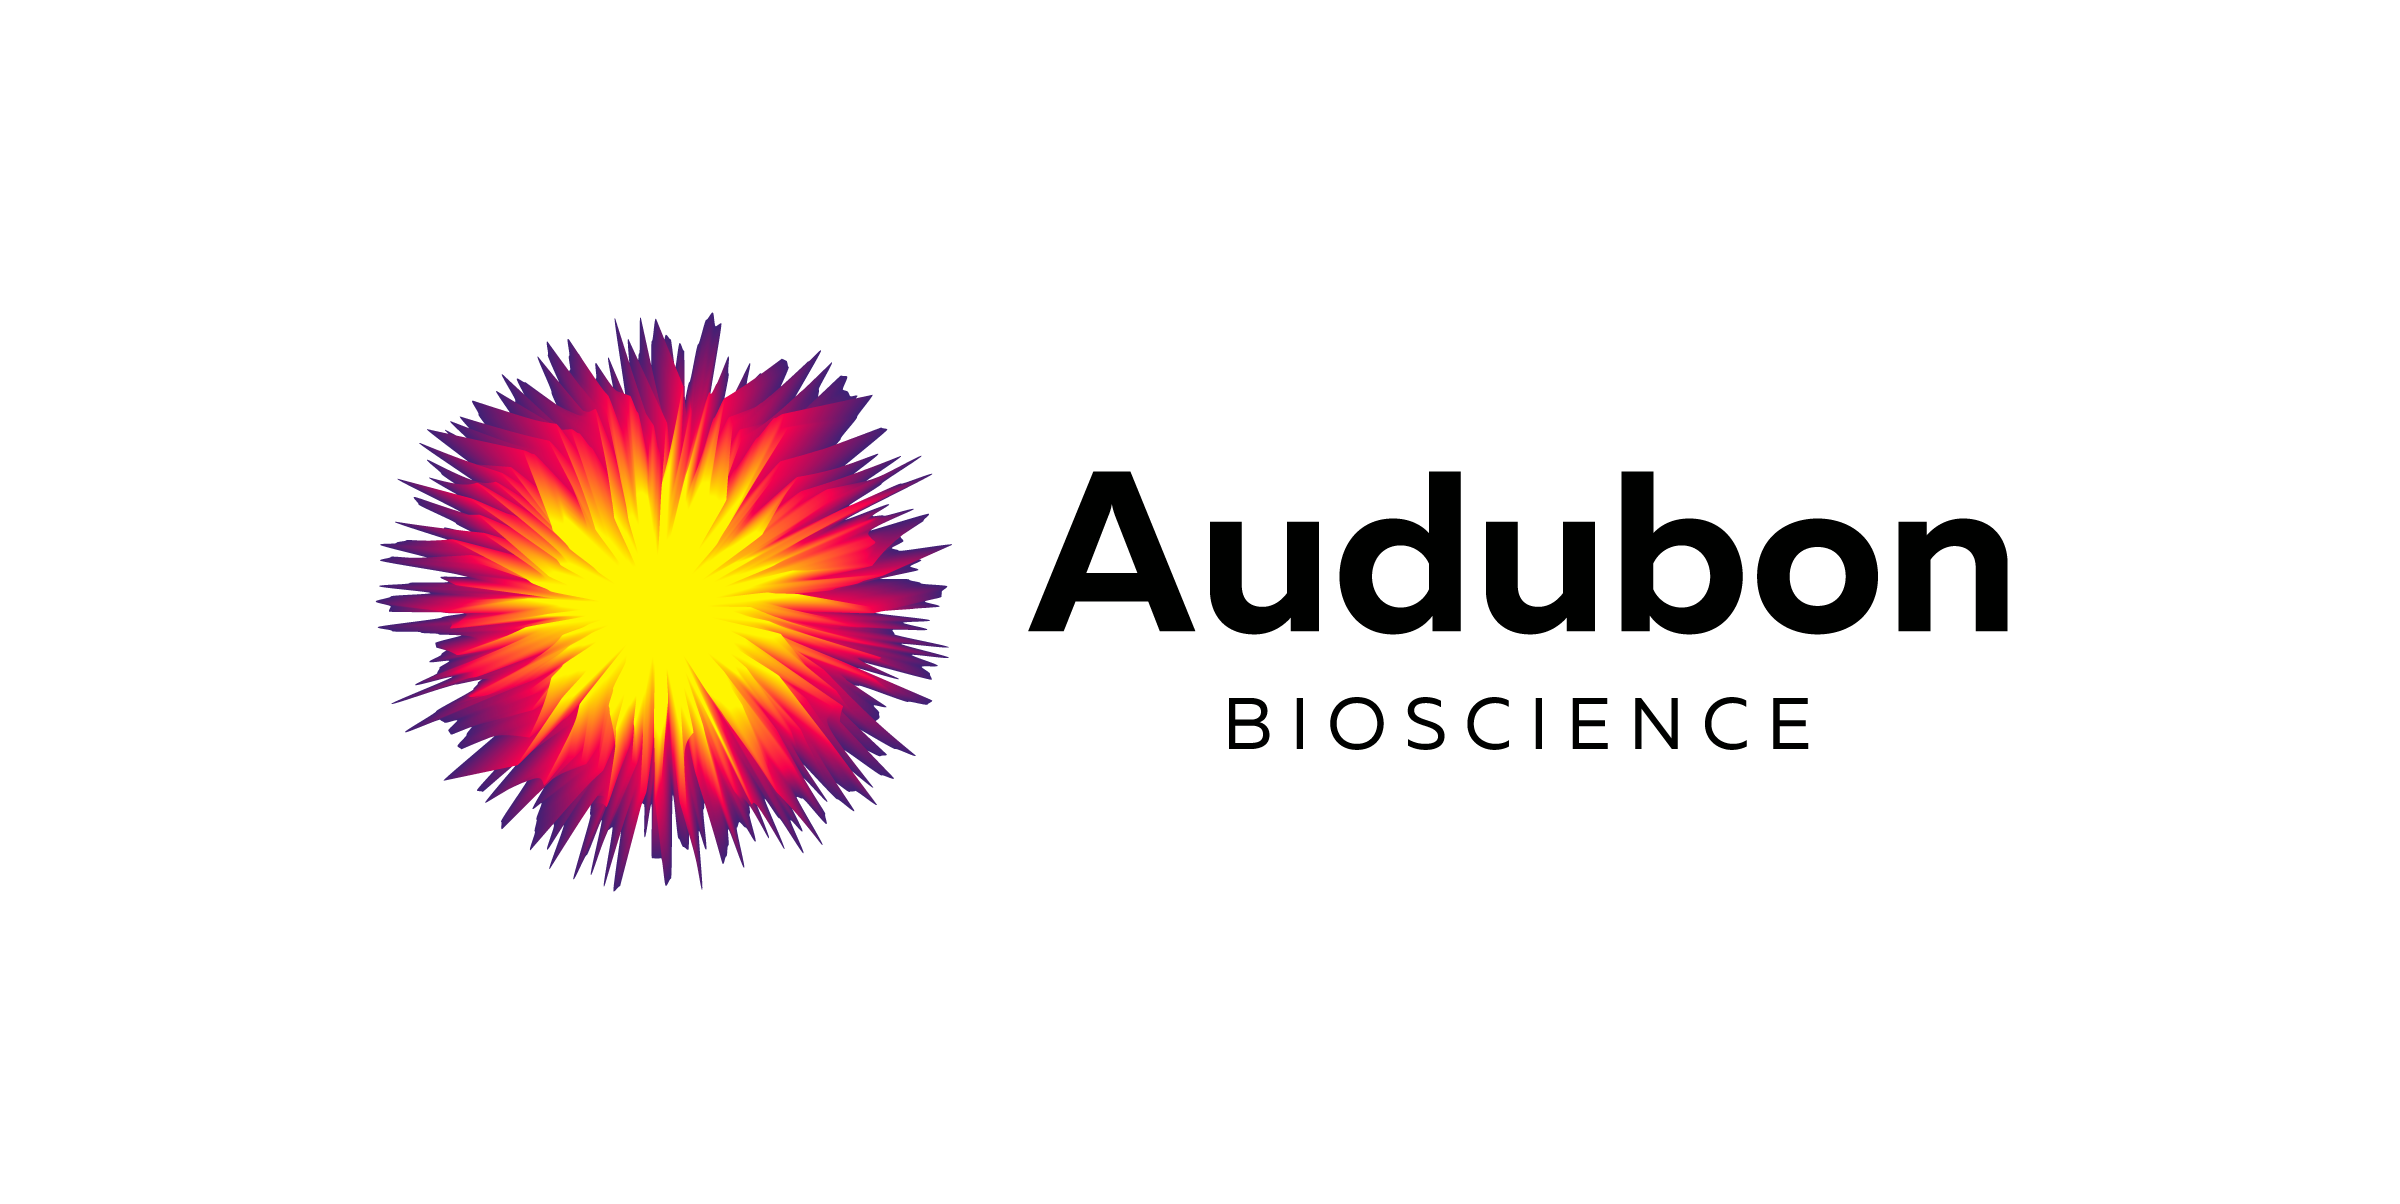 Audubon Bioscience